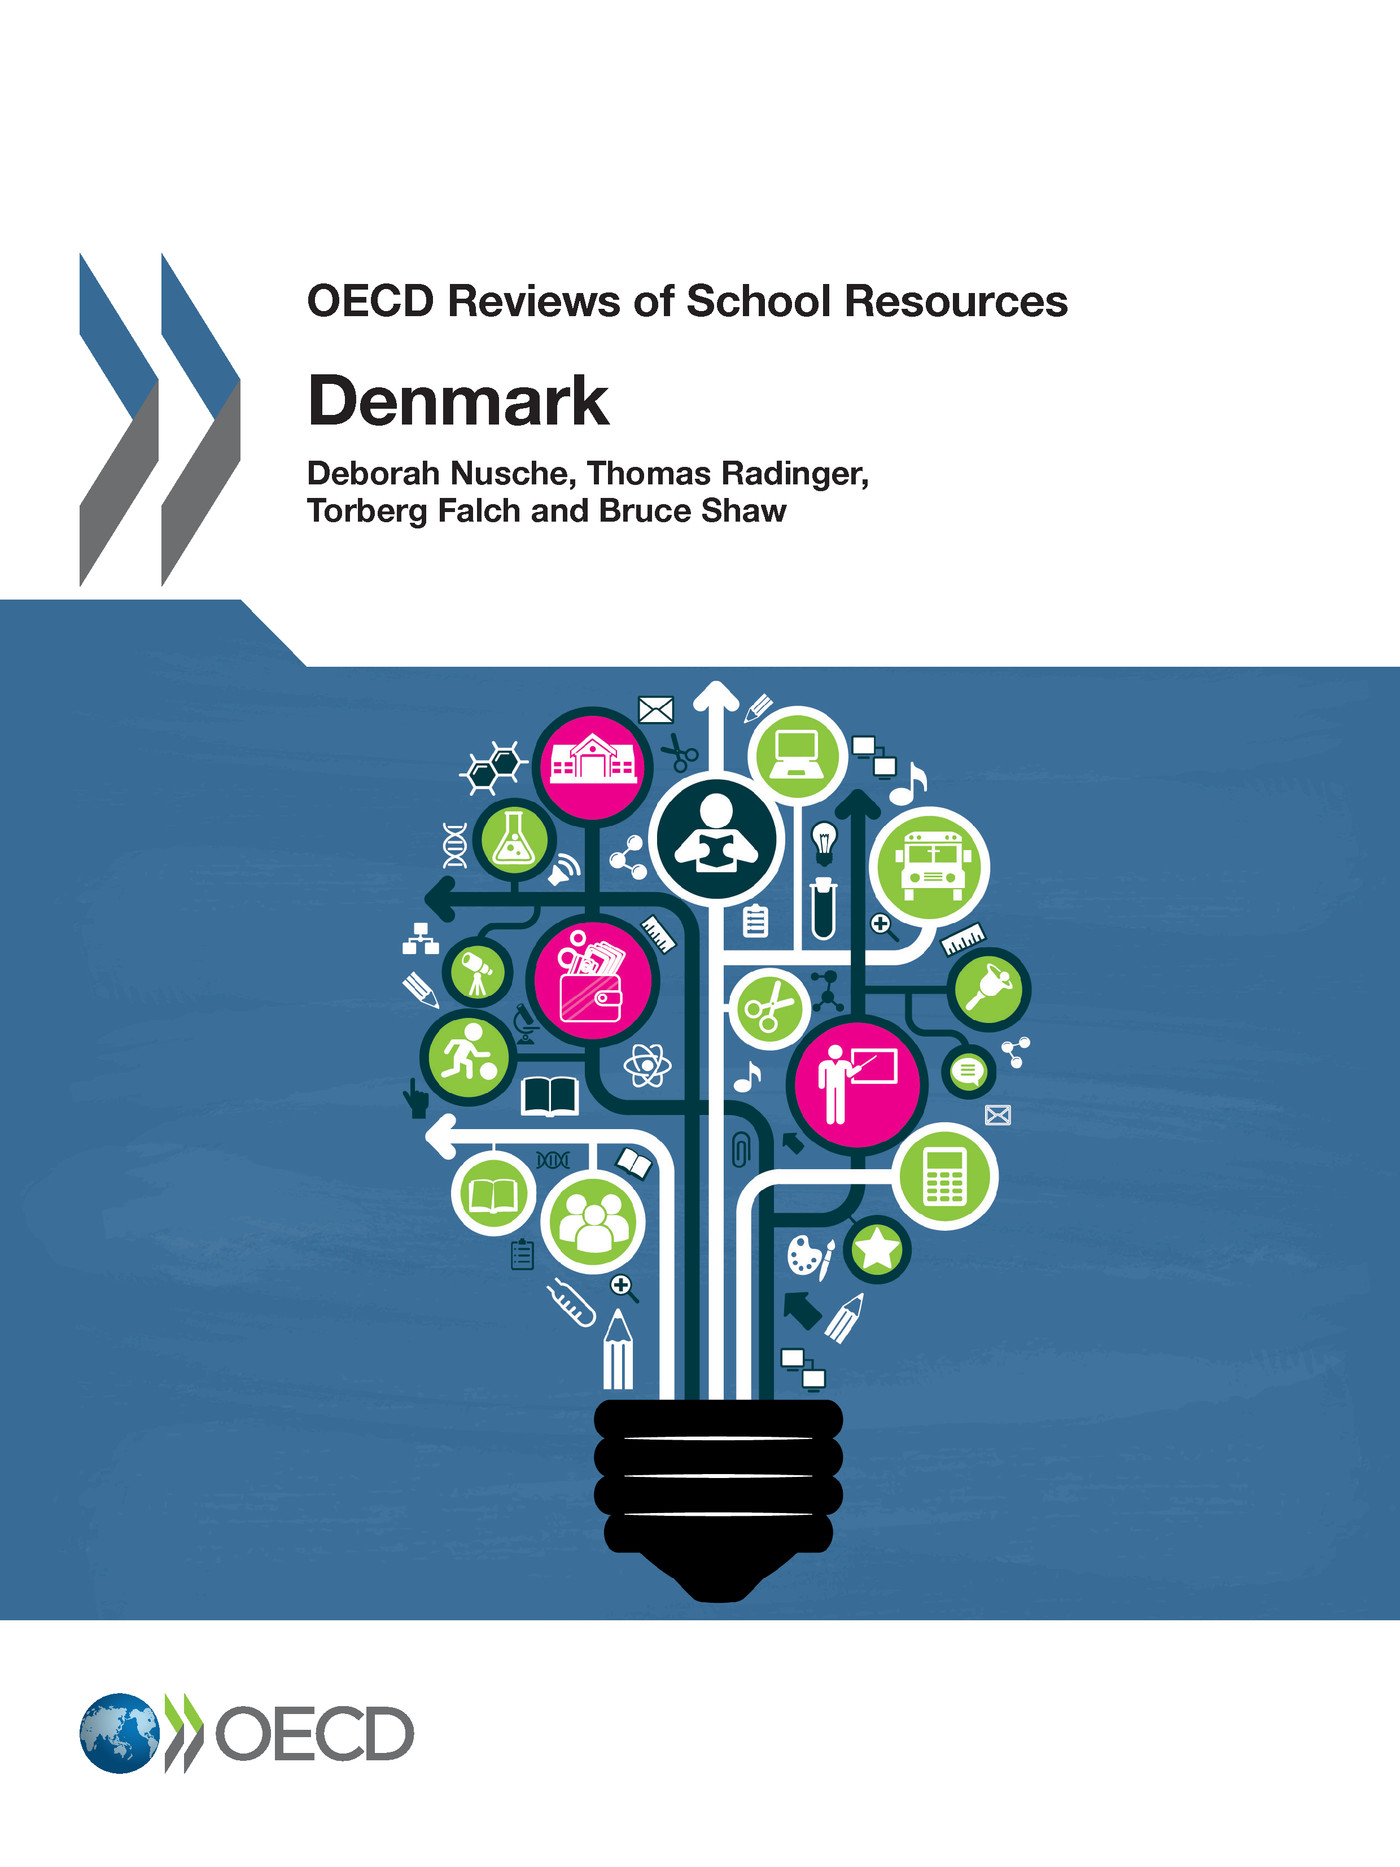 OECD Reviews of School Resources: Denmark 2016 -  Collectif - OCDE / OECD